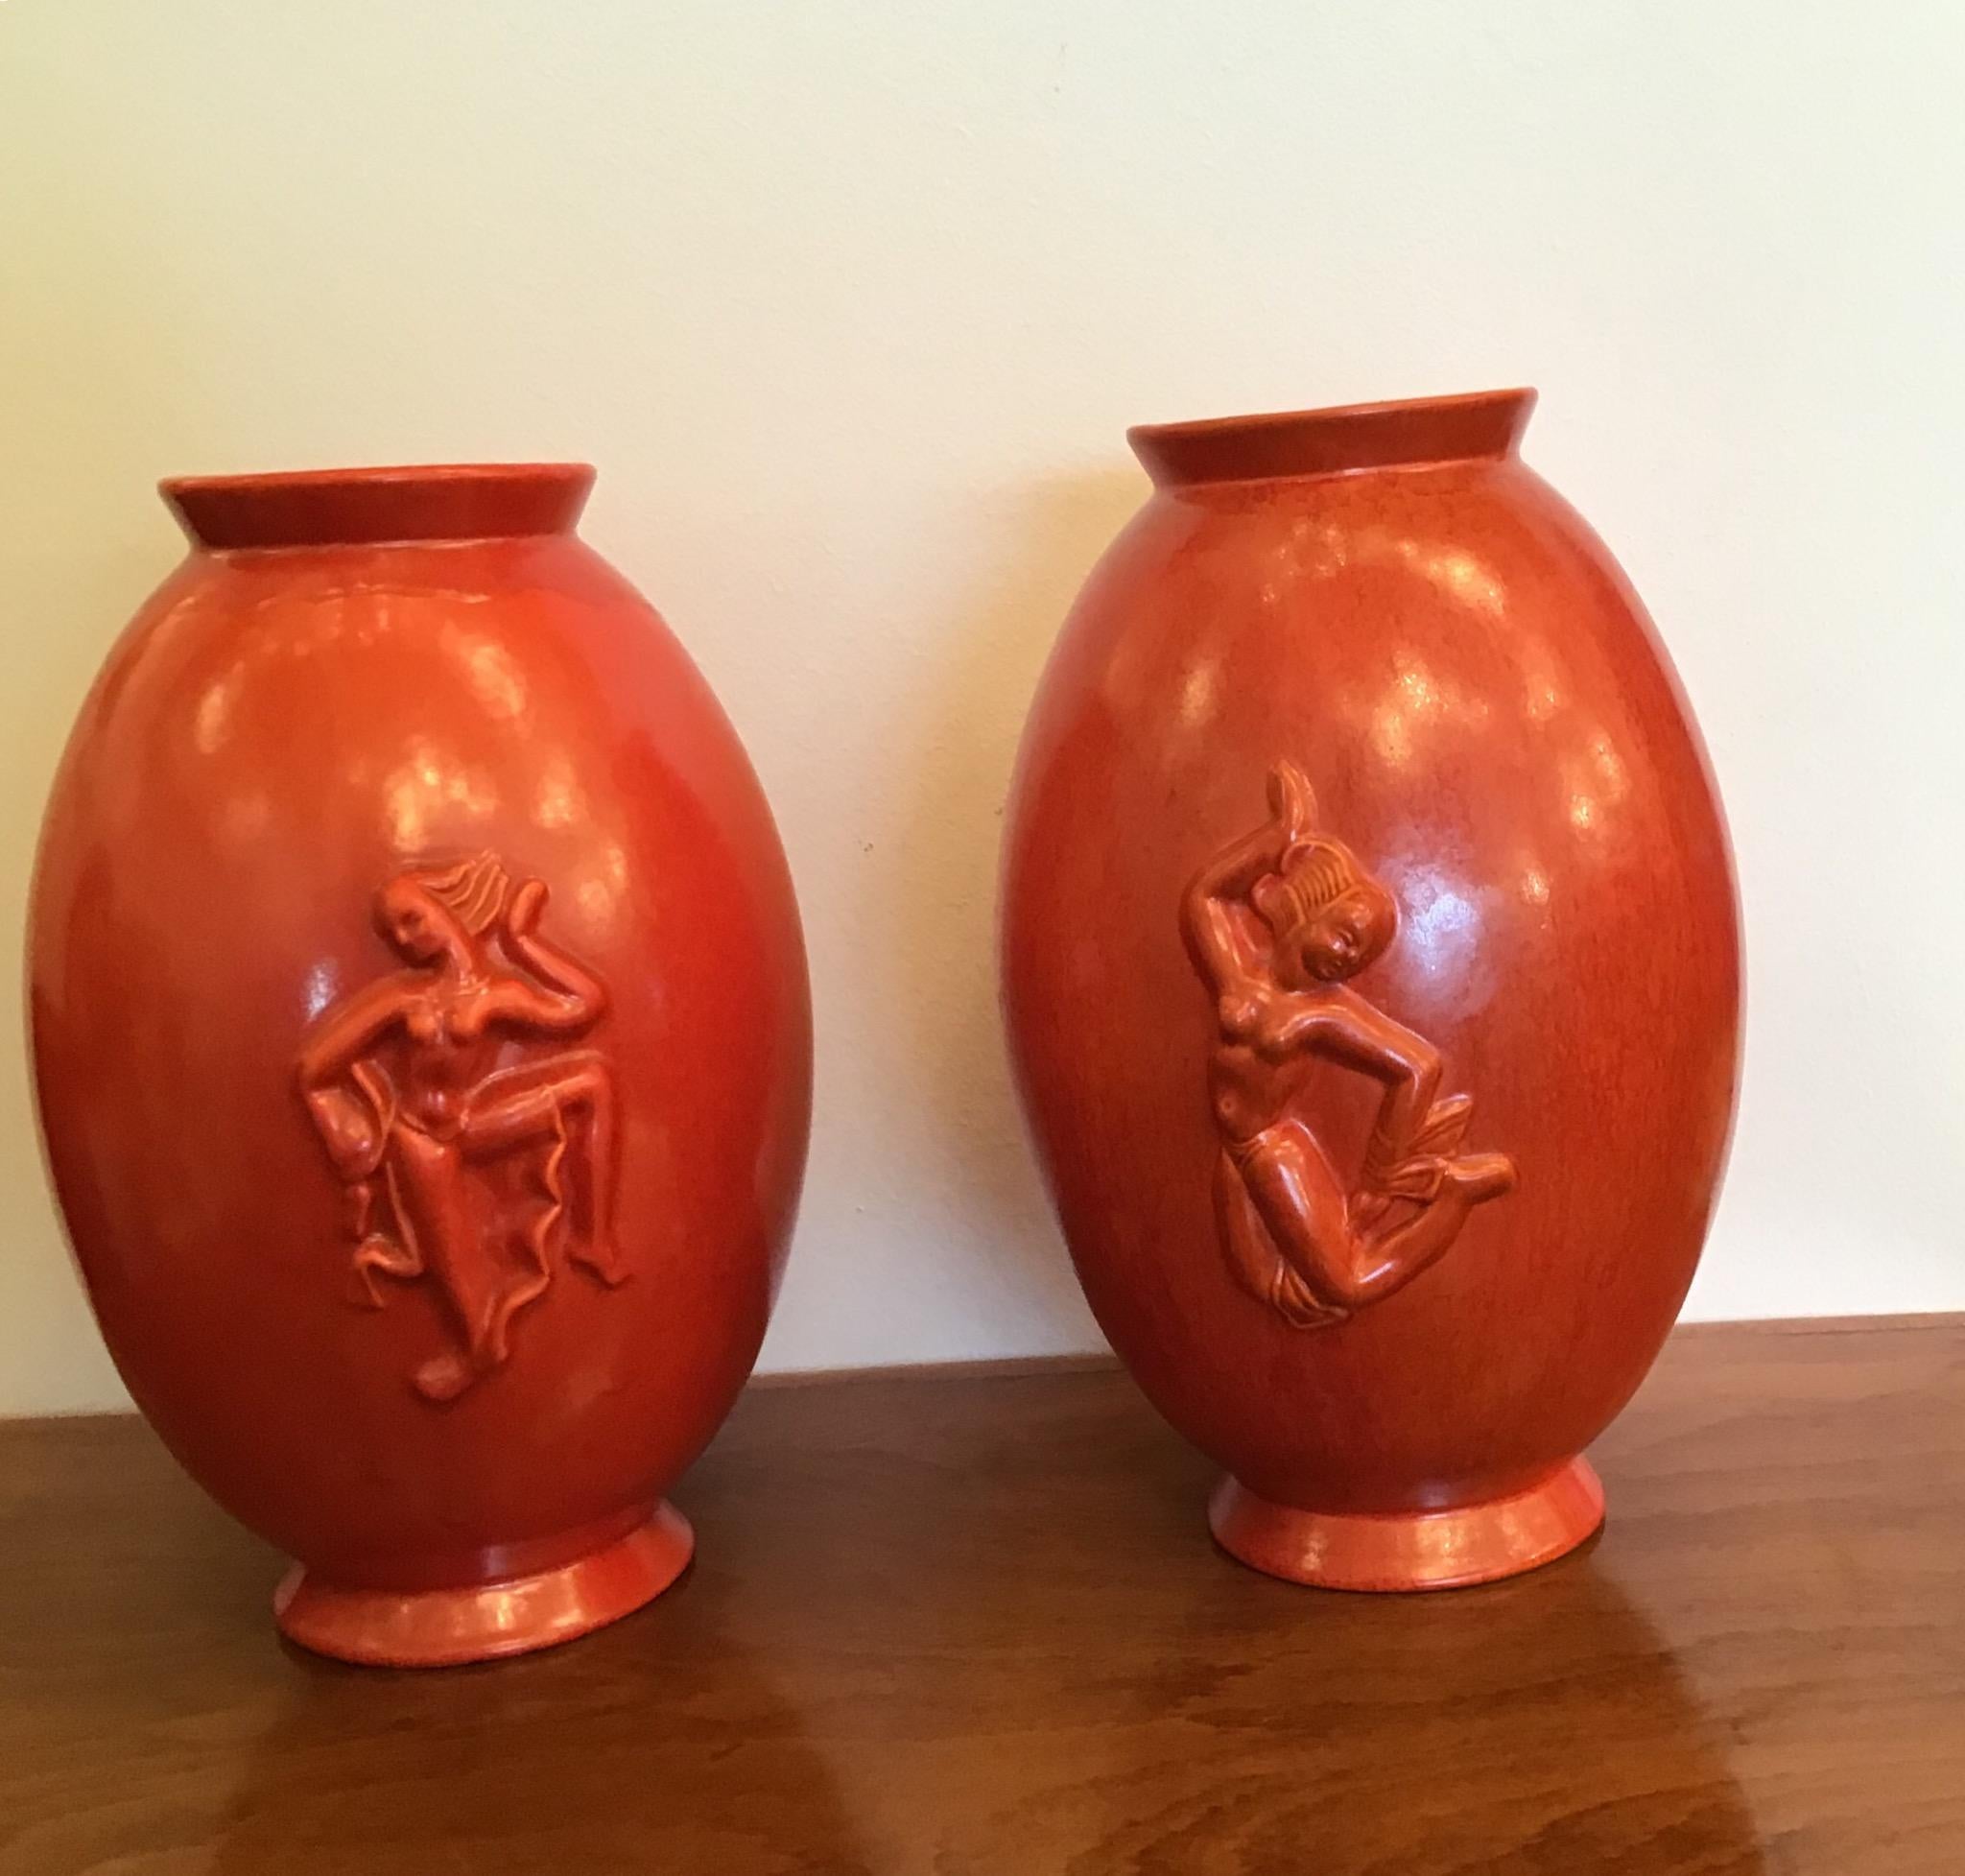 Laveno Angelo Biancini pair of vases 1930 Maiolica earthenware, Italy.